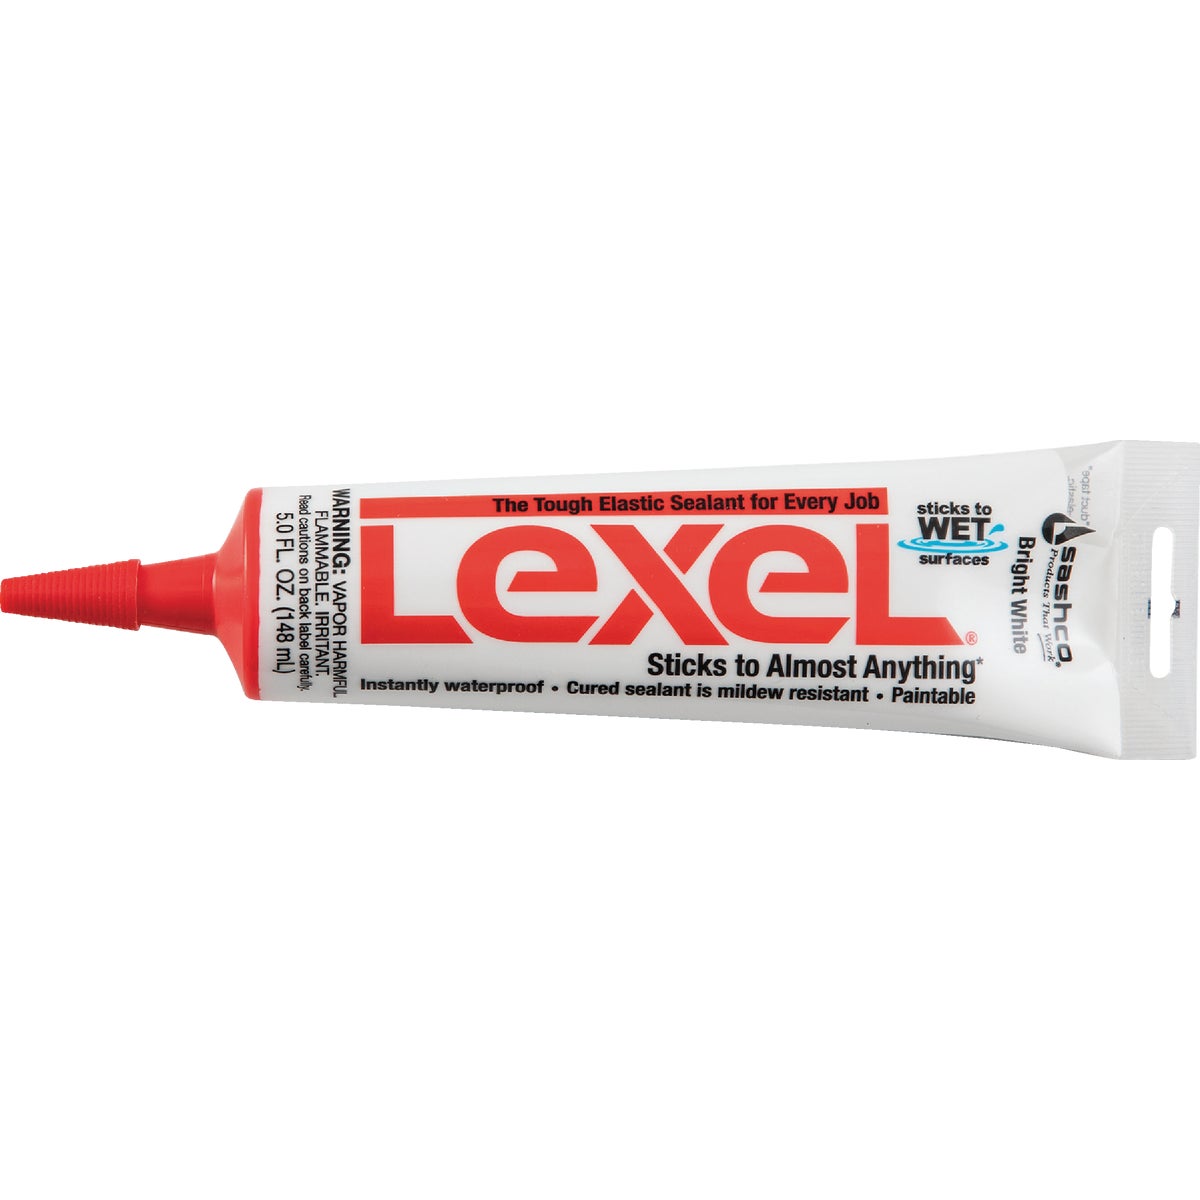 Item 779316, Lexel is the Tough Elastic Sealant for Every Job. Super-elastic.